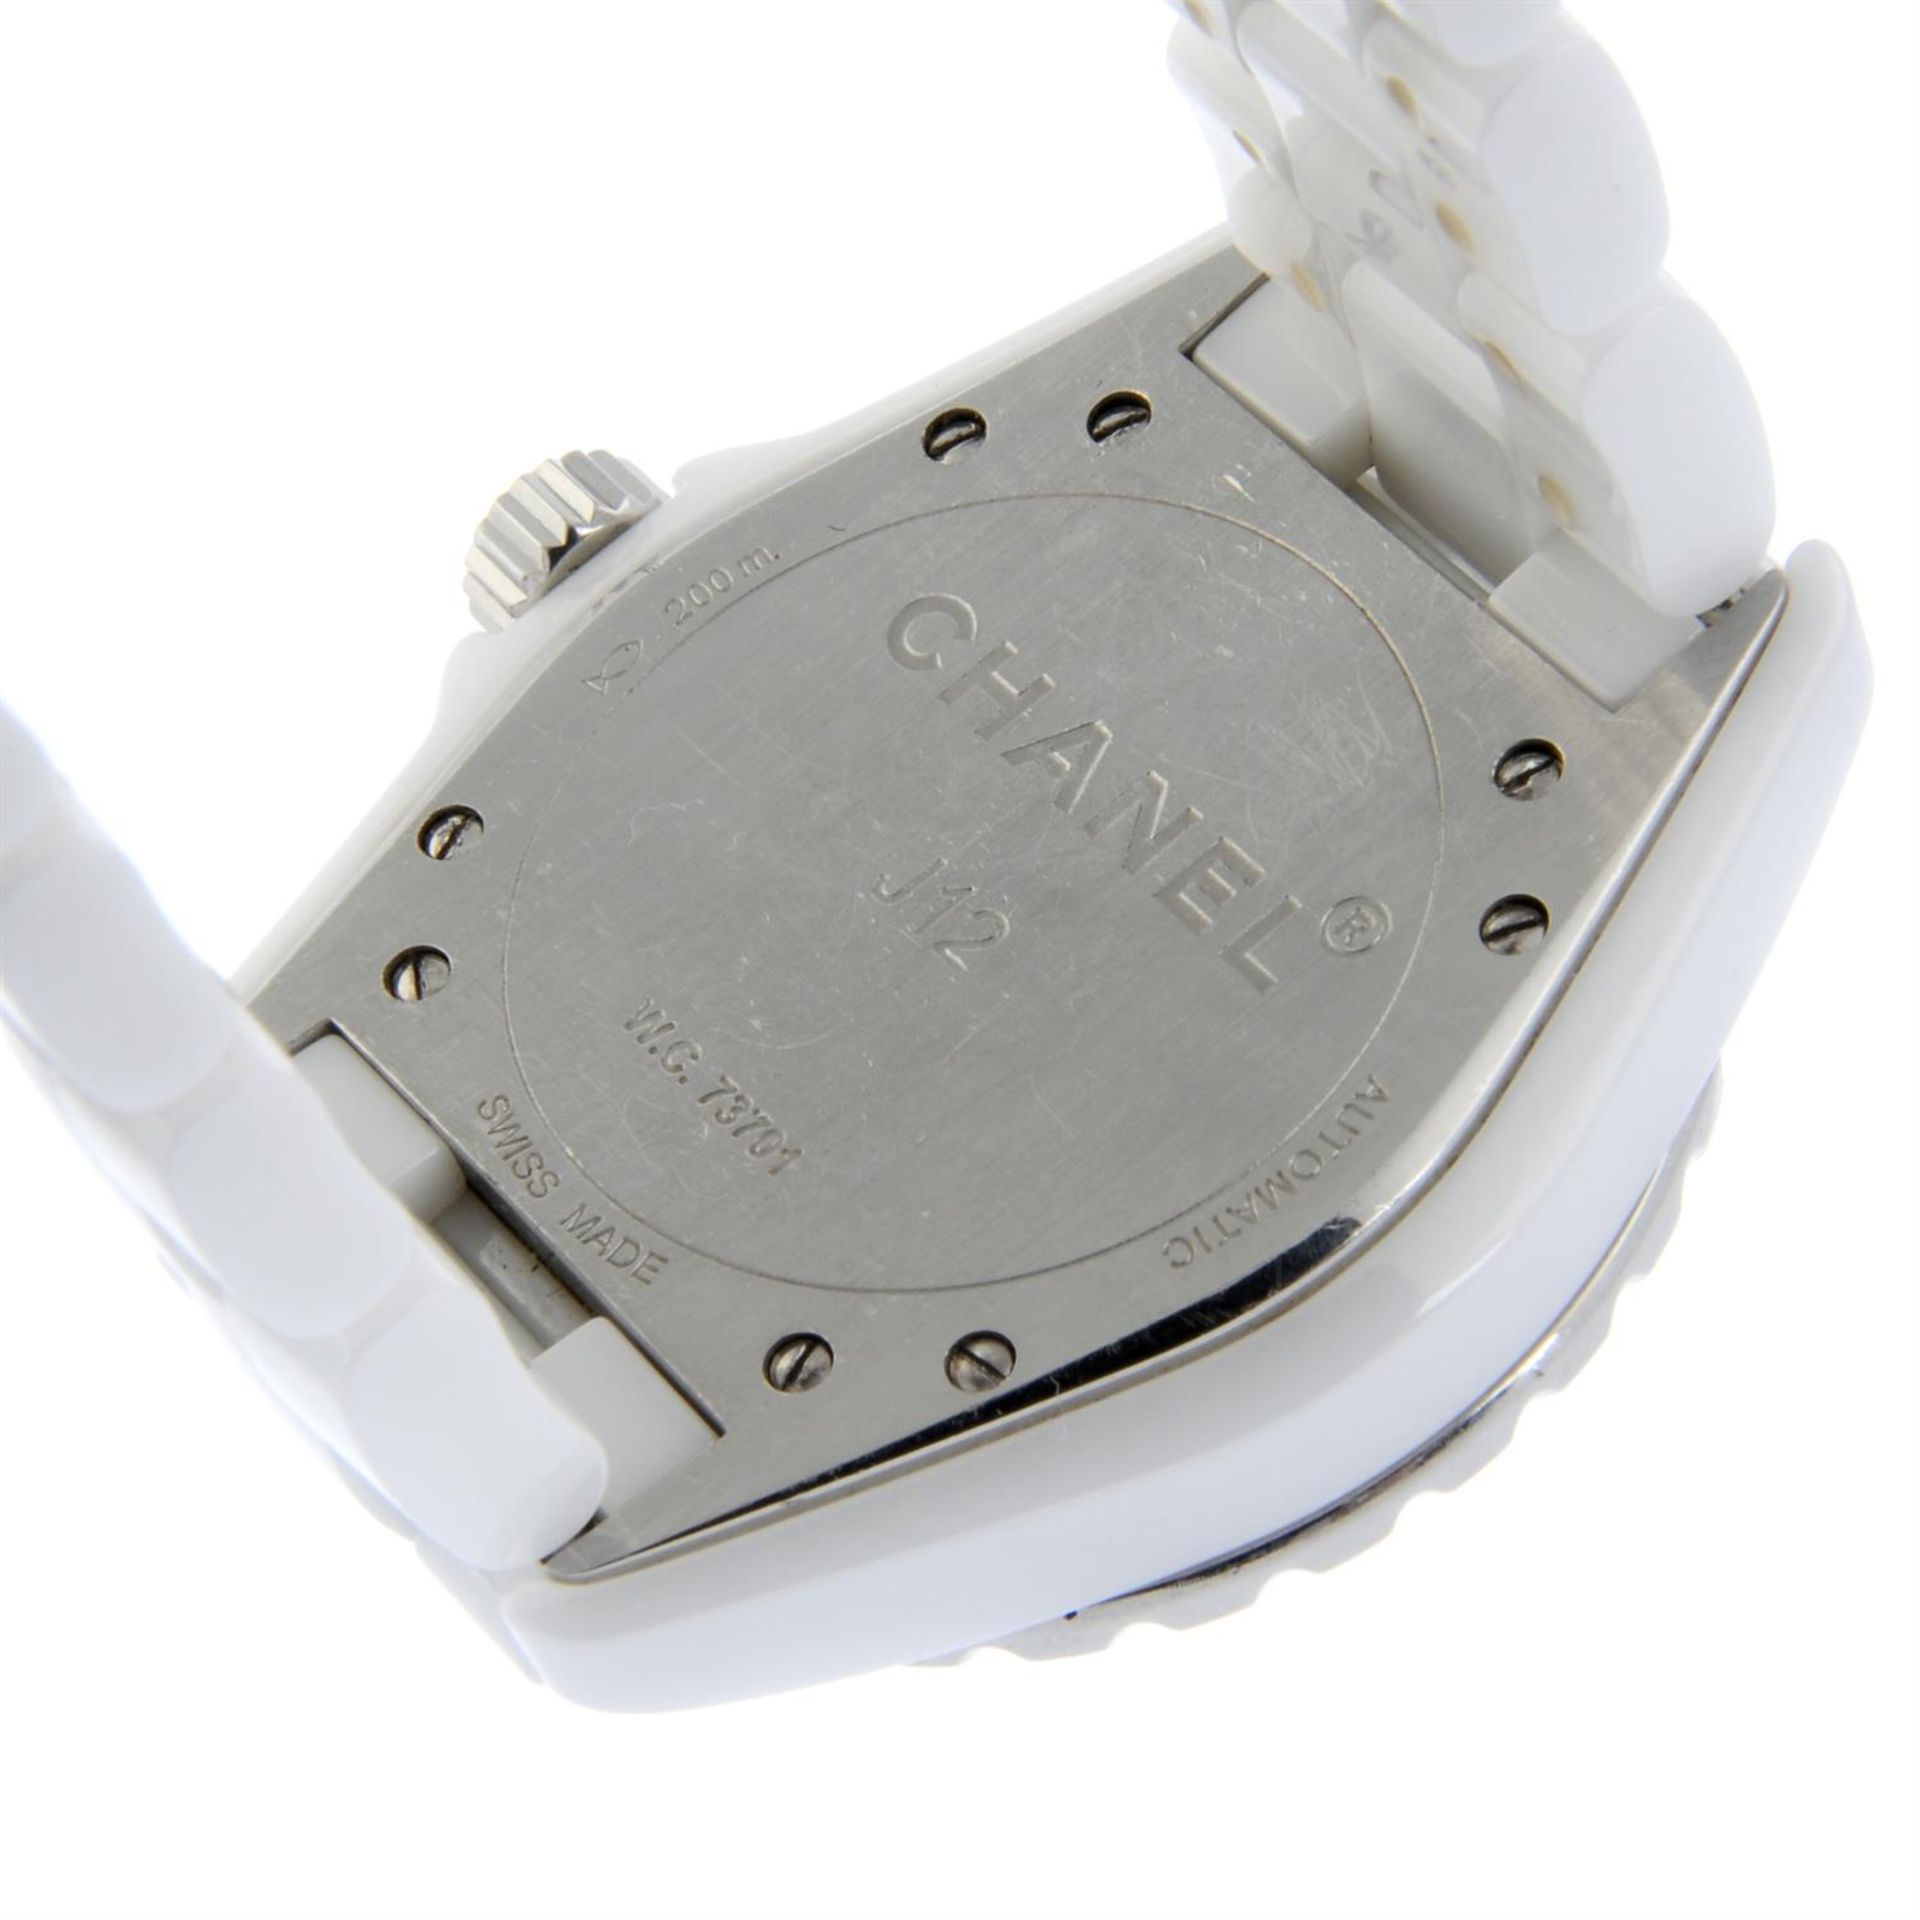 CHANEL - a ceramic J12 bracelet watch, 37mm. - Image 4 of 6